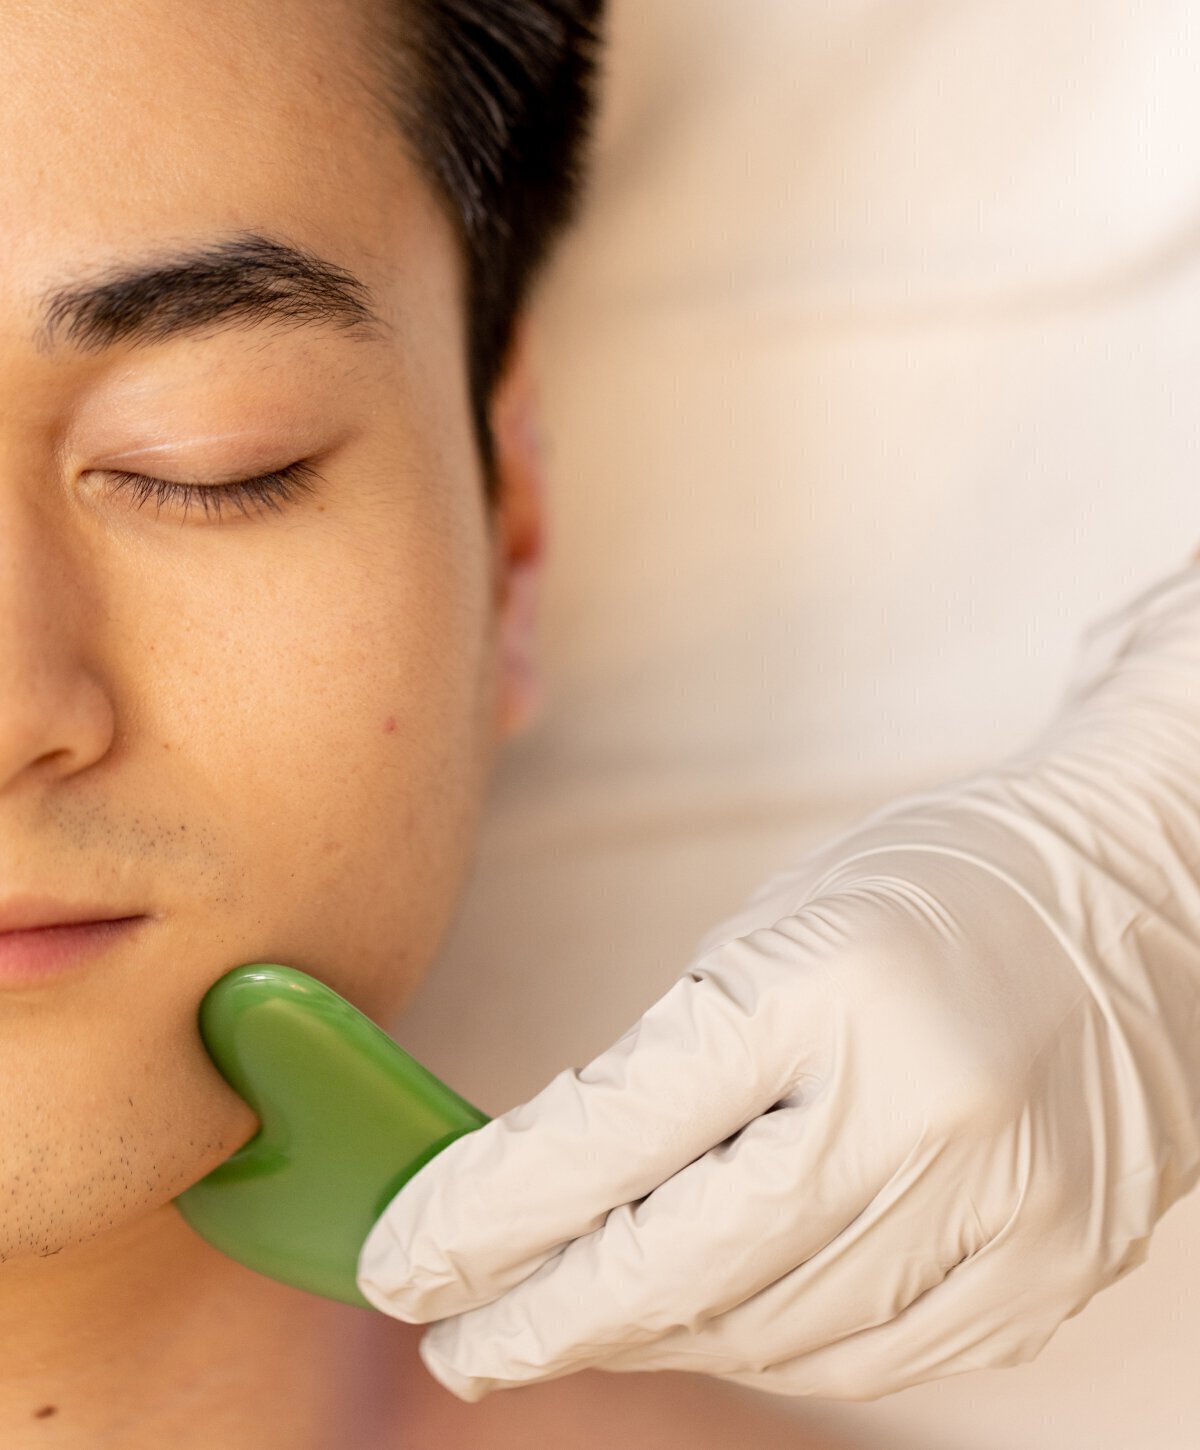 Bay Area facial massage client receiving treatment